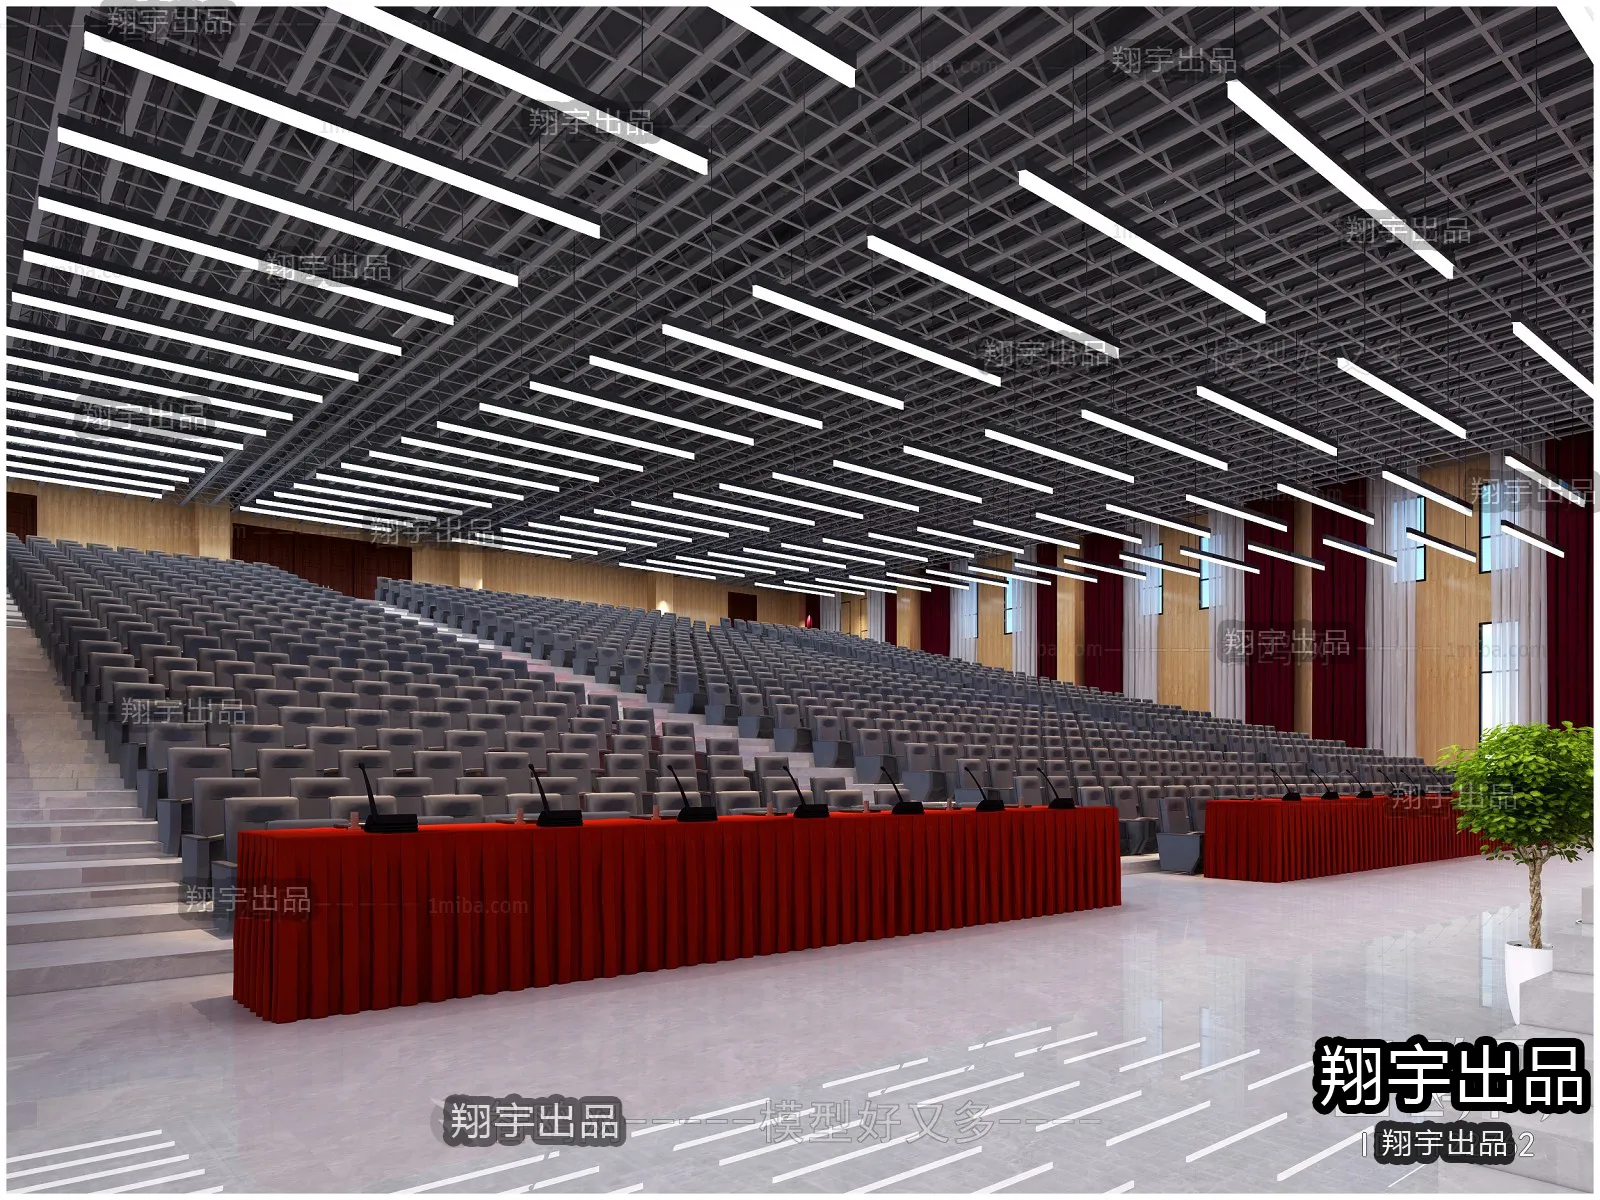 3D SCHOOL INTERIOR (VRAY) – LECTURE HALL 3D SCENES – 002